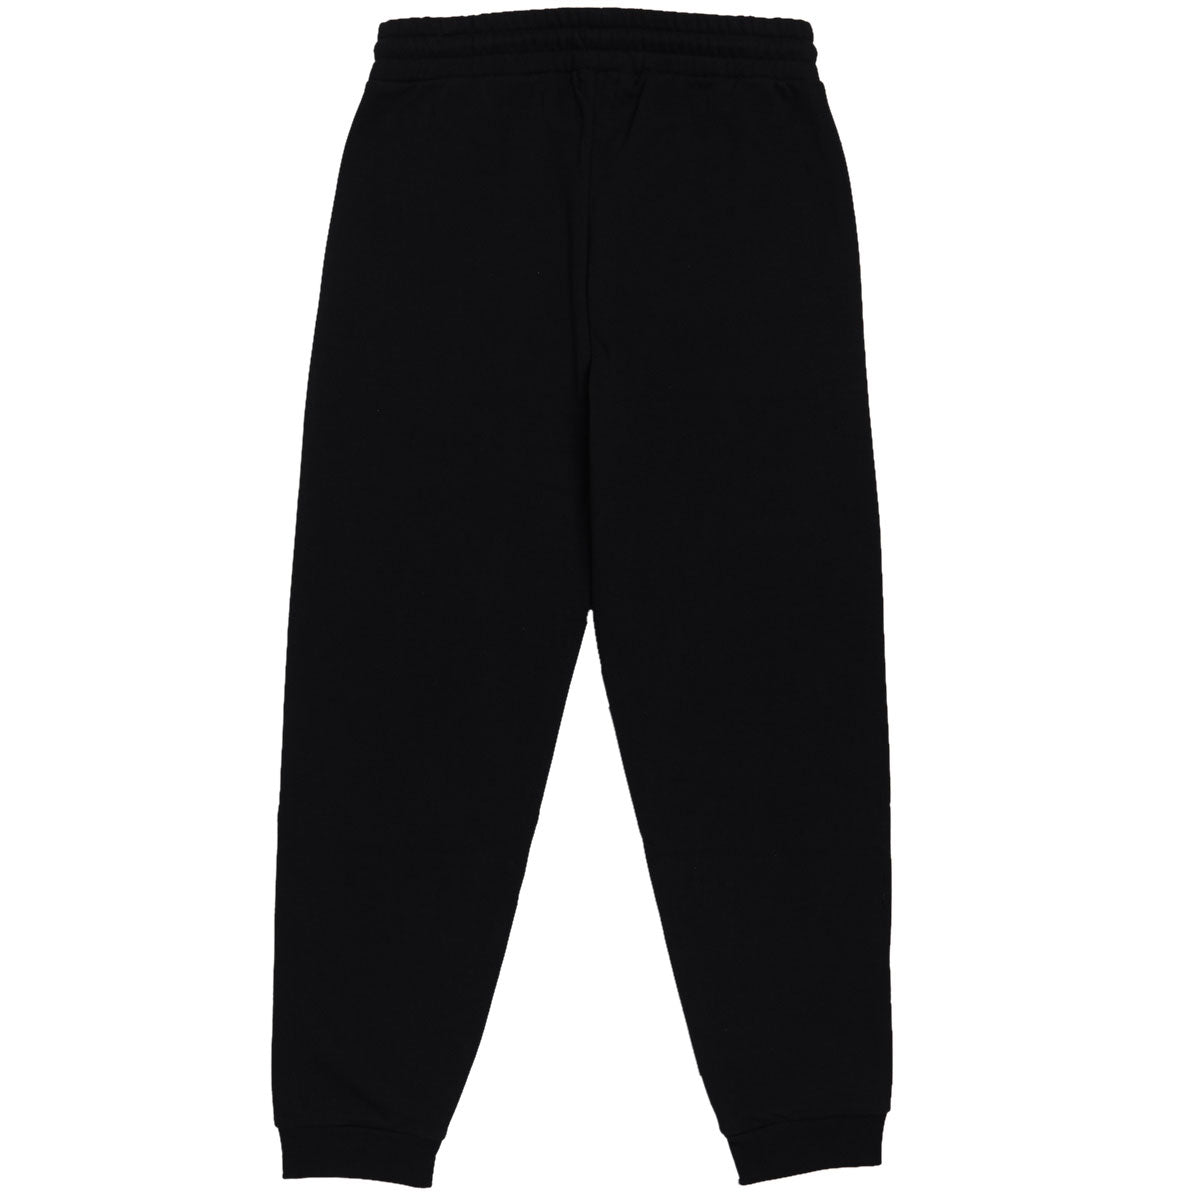 Brixton Crest Line Fleece Sweat Pants - Black image 2